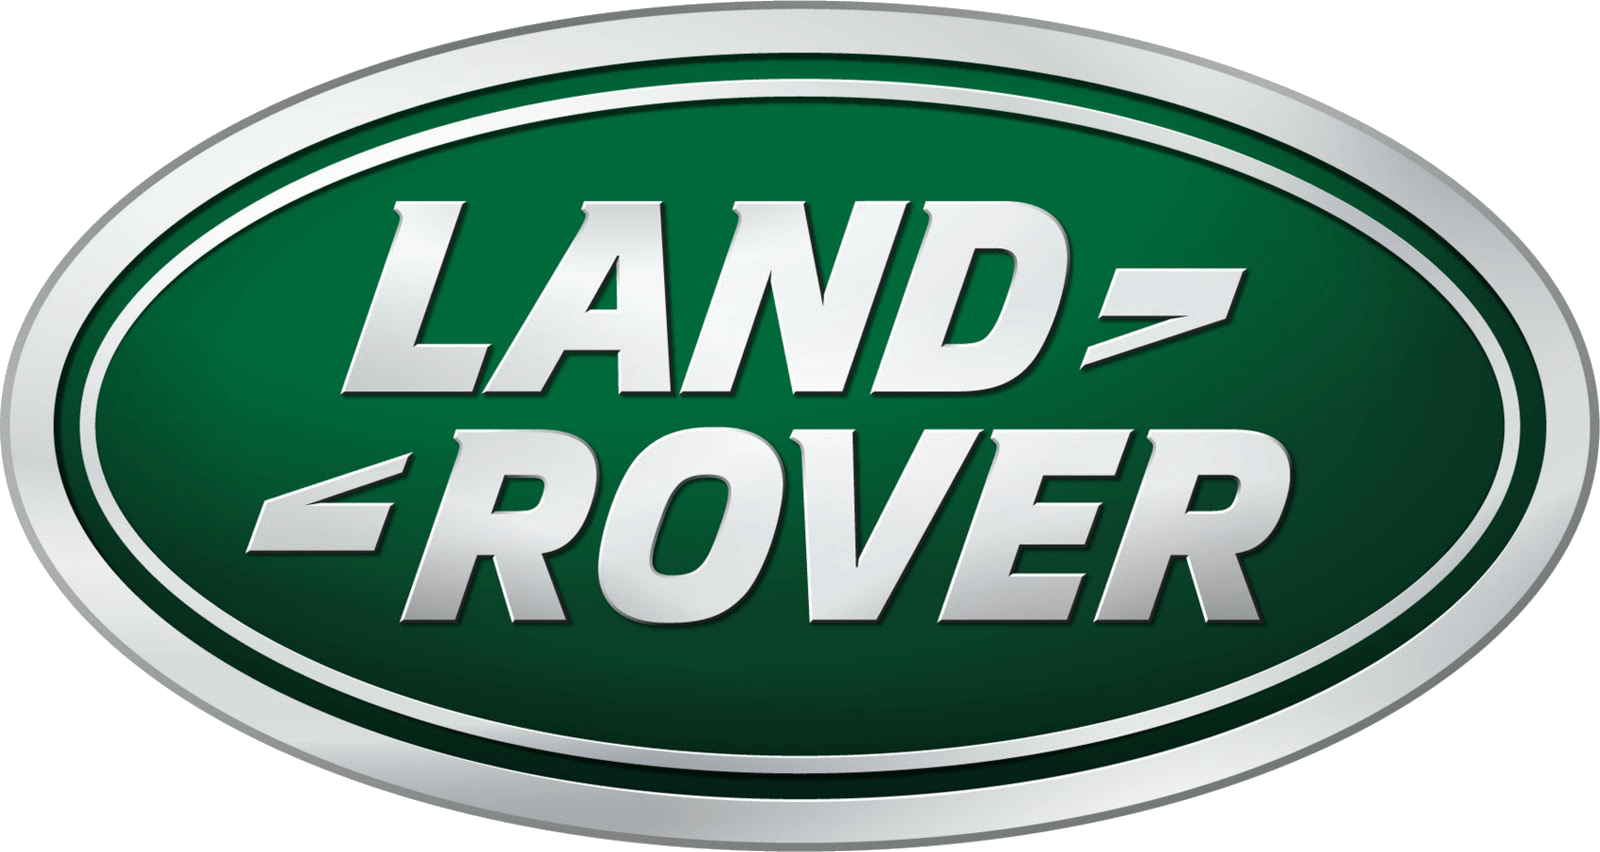 Green Car Logo - Land Rover Logo, Land Rover Car Symbol Meaning and History | Car ...